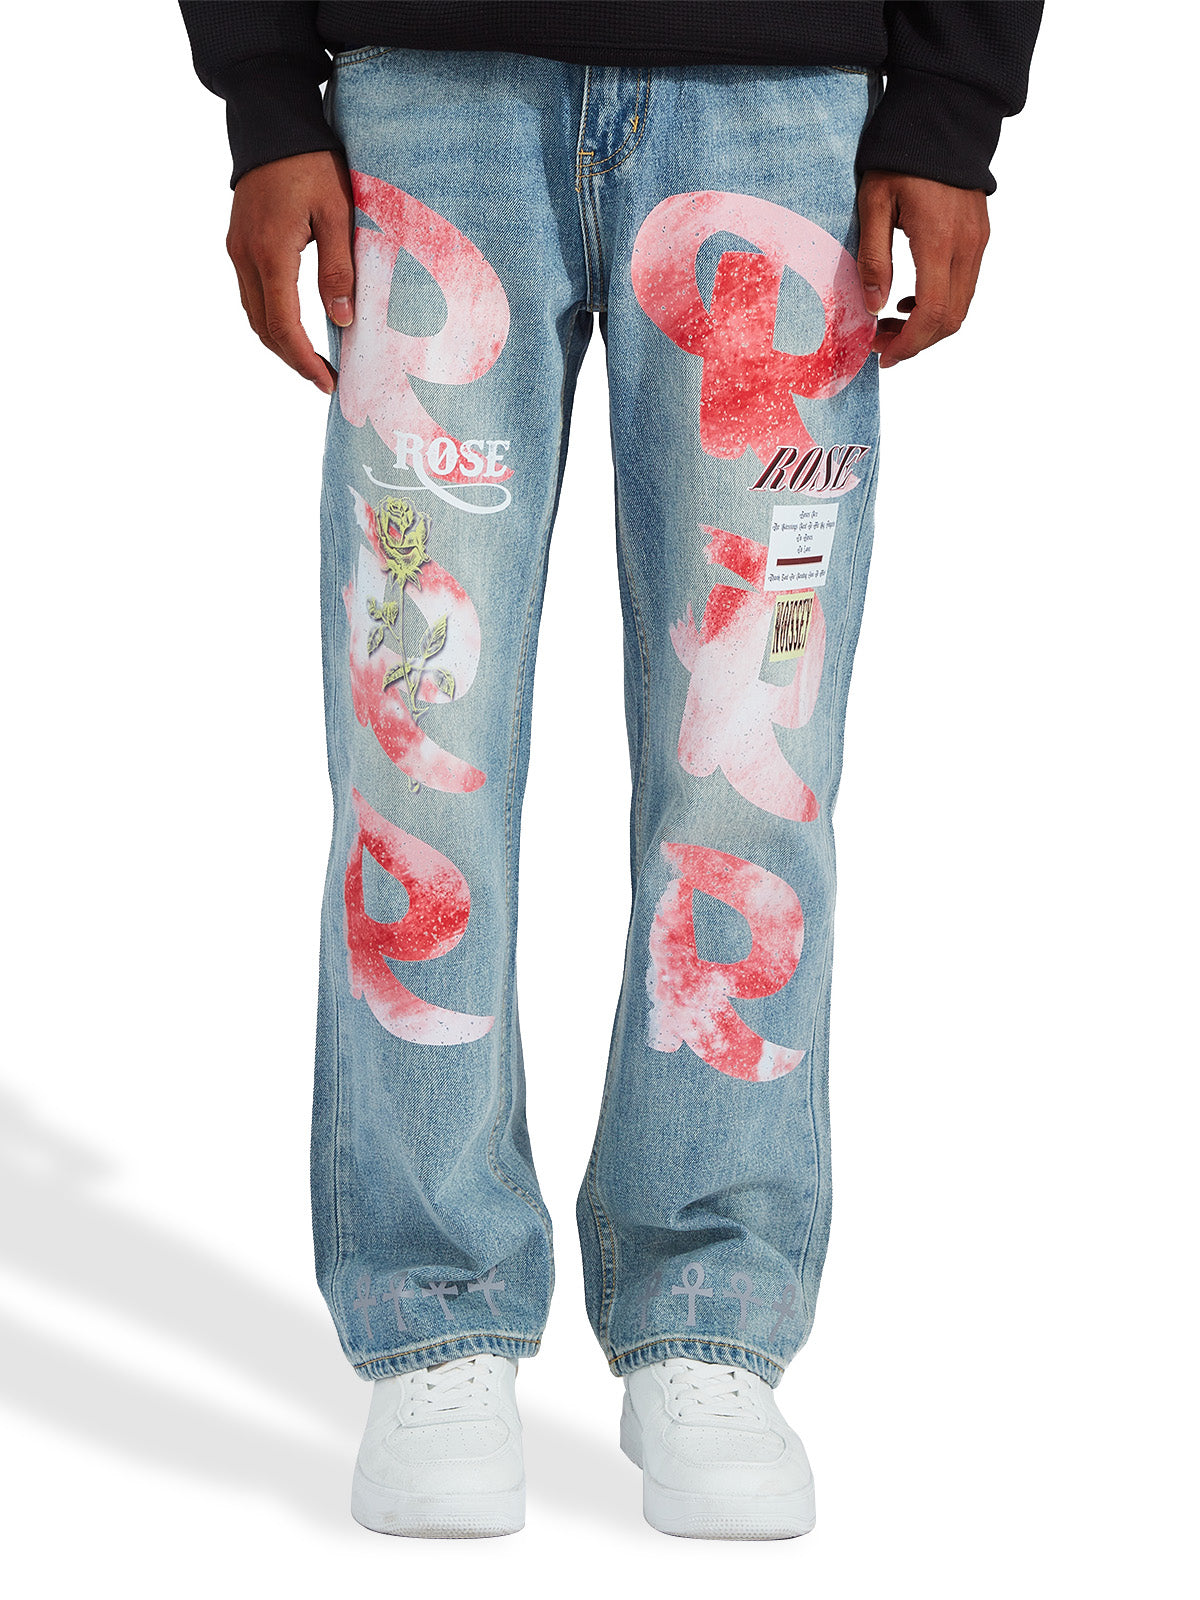 OBSTACLES & DANGERS©Noissey Rose Patchwork Denim Jeans